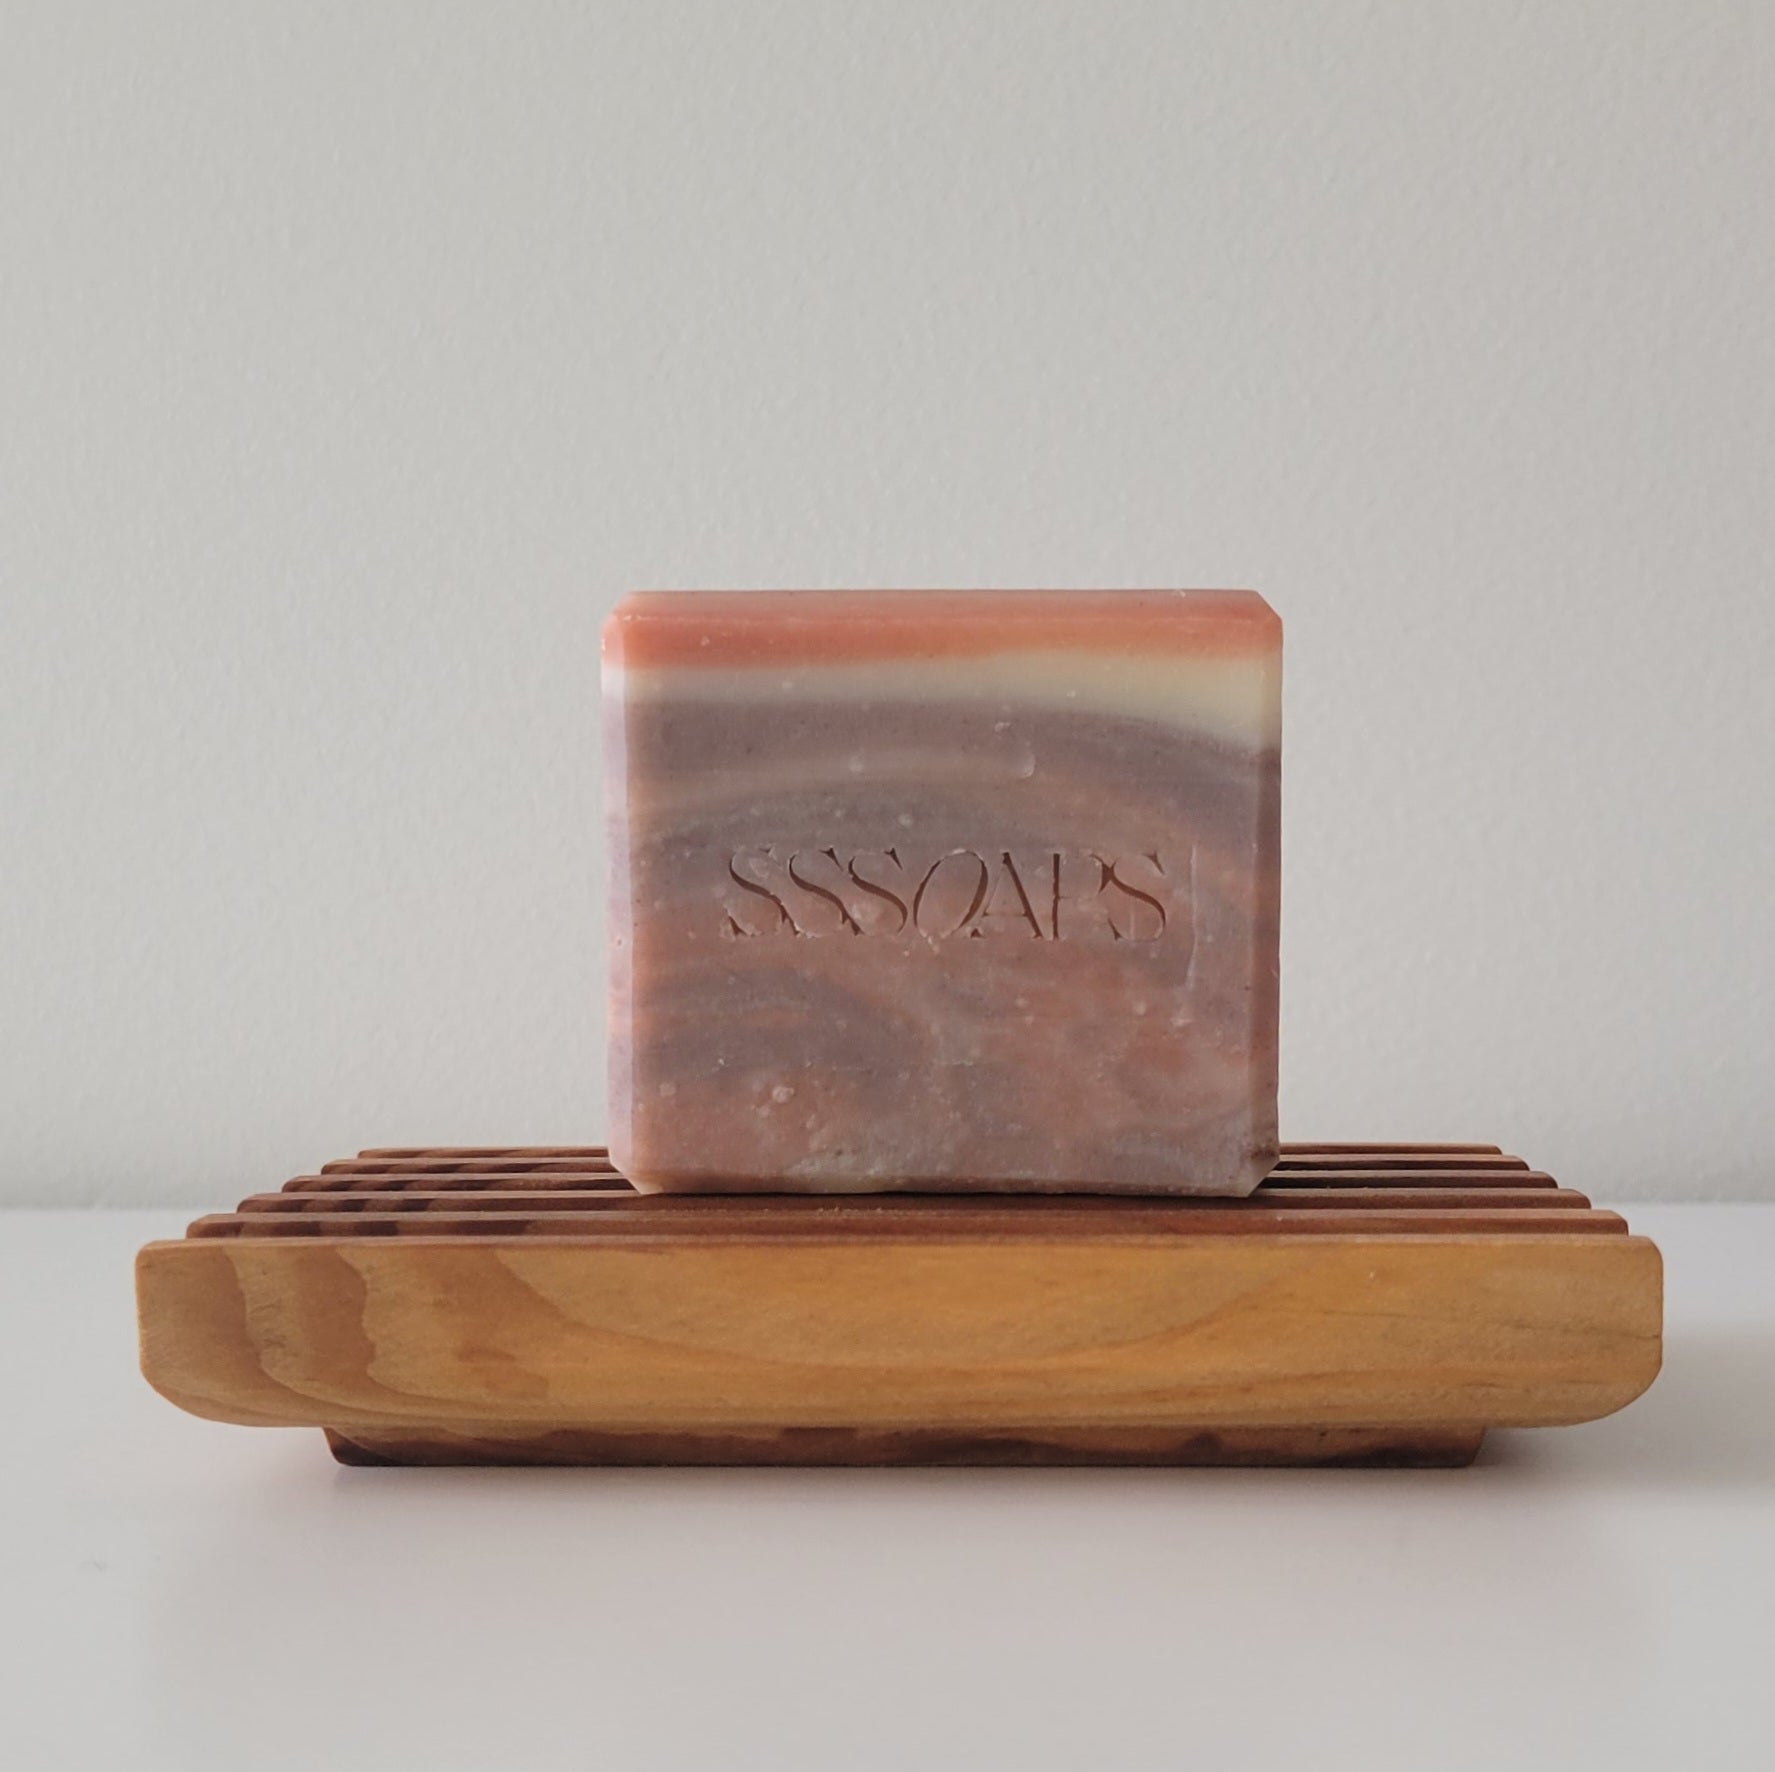 SSSOAPS - Batch 85 Soap